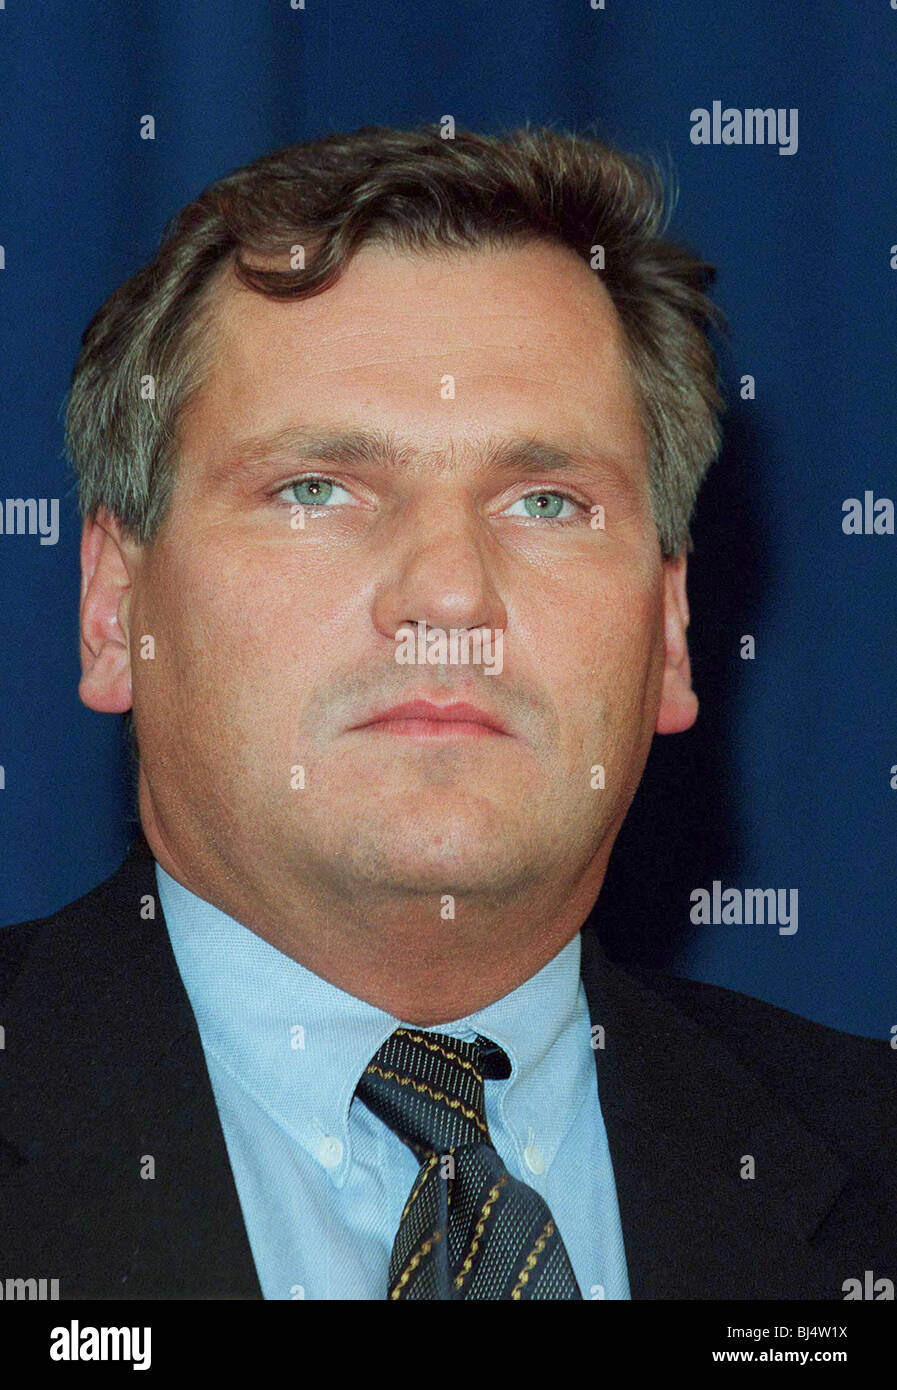 ALEKSANDER KWASNIEWSKI PRESIDENT OF POLAND 05 November 1996 Stock Photo